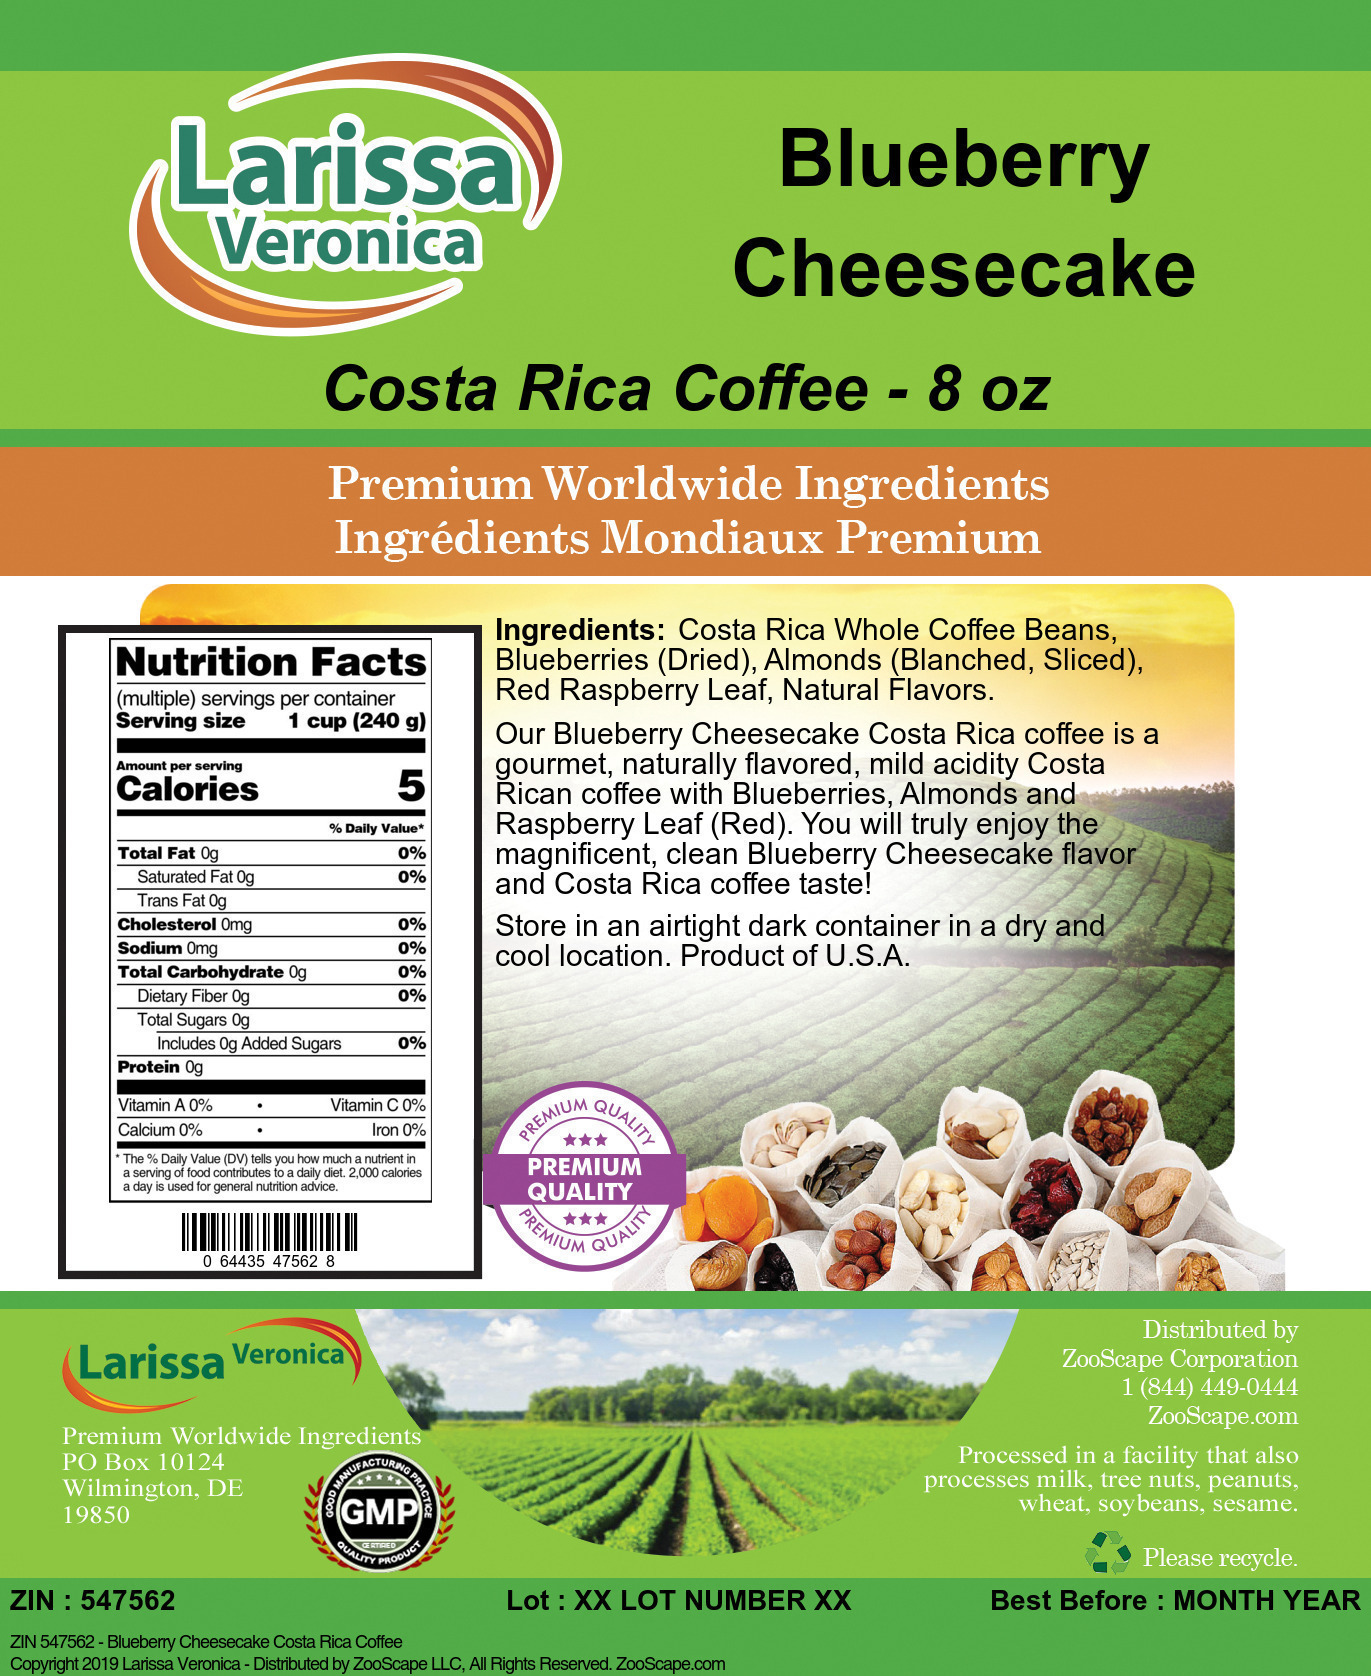 Blueberry Cheesecake Costa Rica Coffee - Label